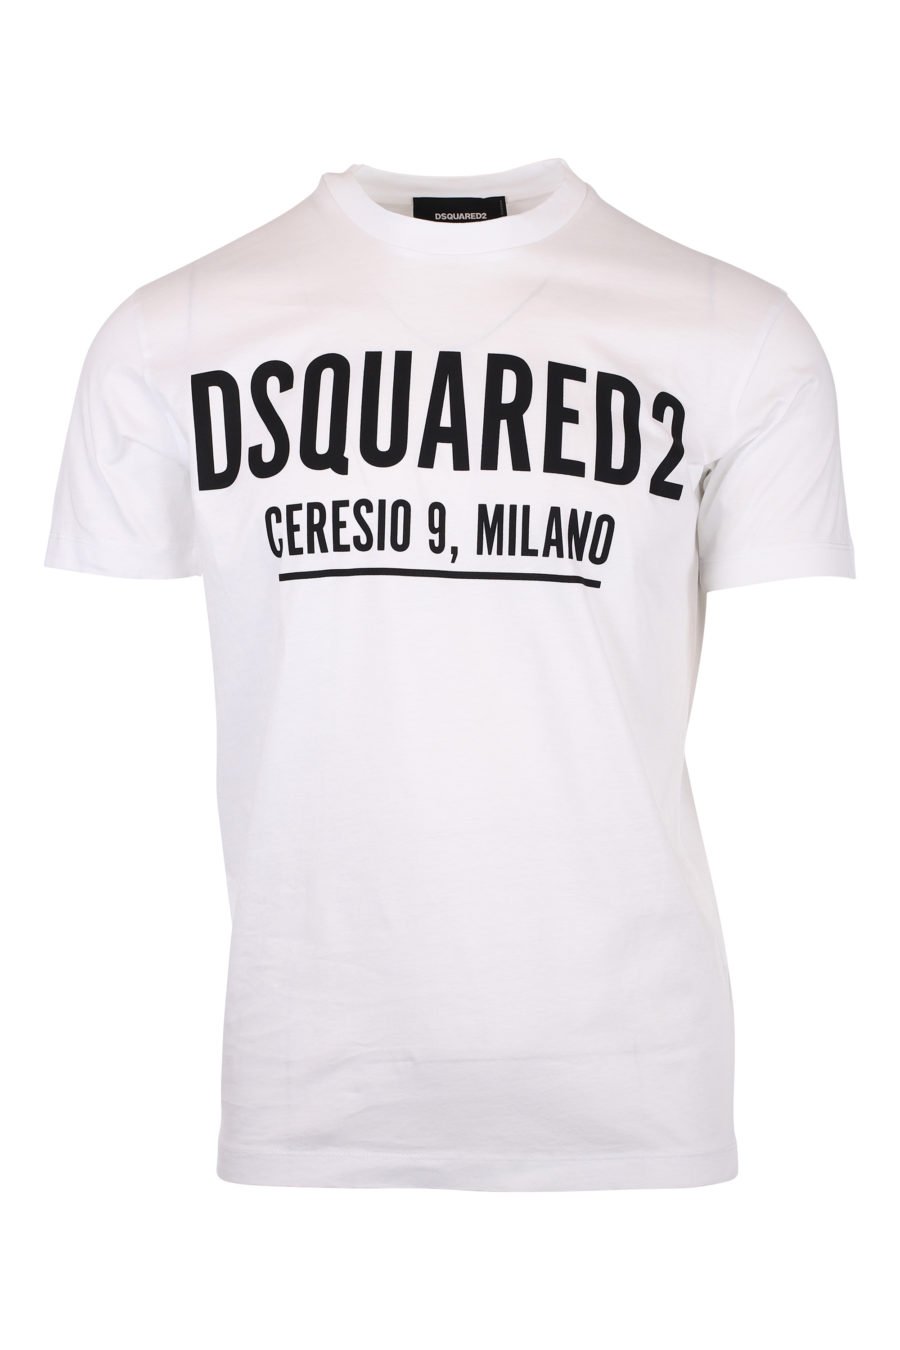 T-shirt white with logo ceresio 9 - IMG 9774